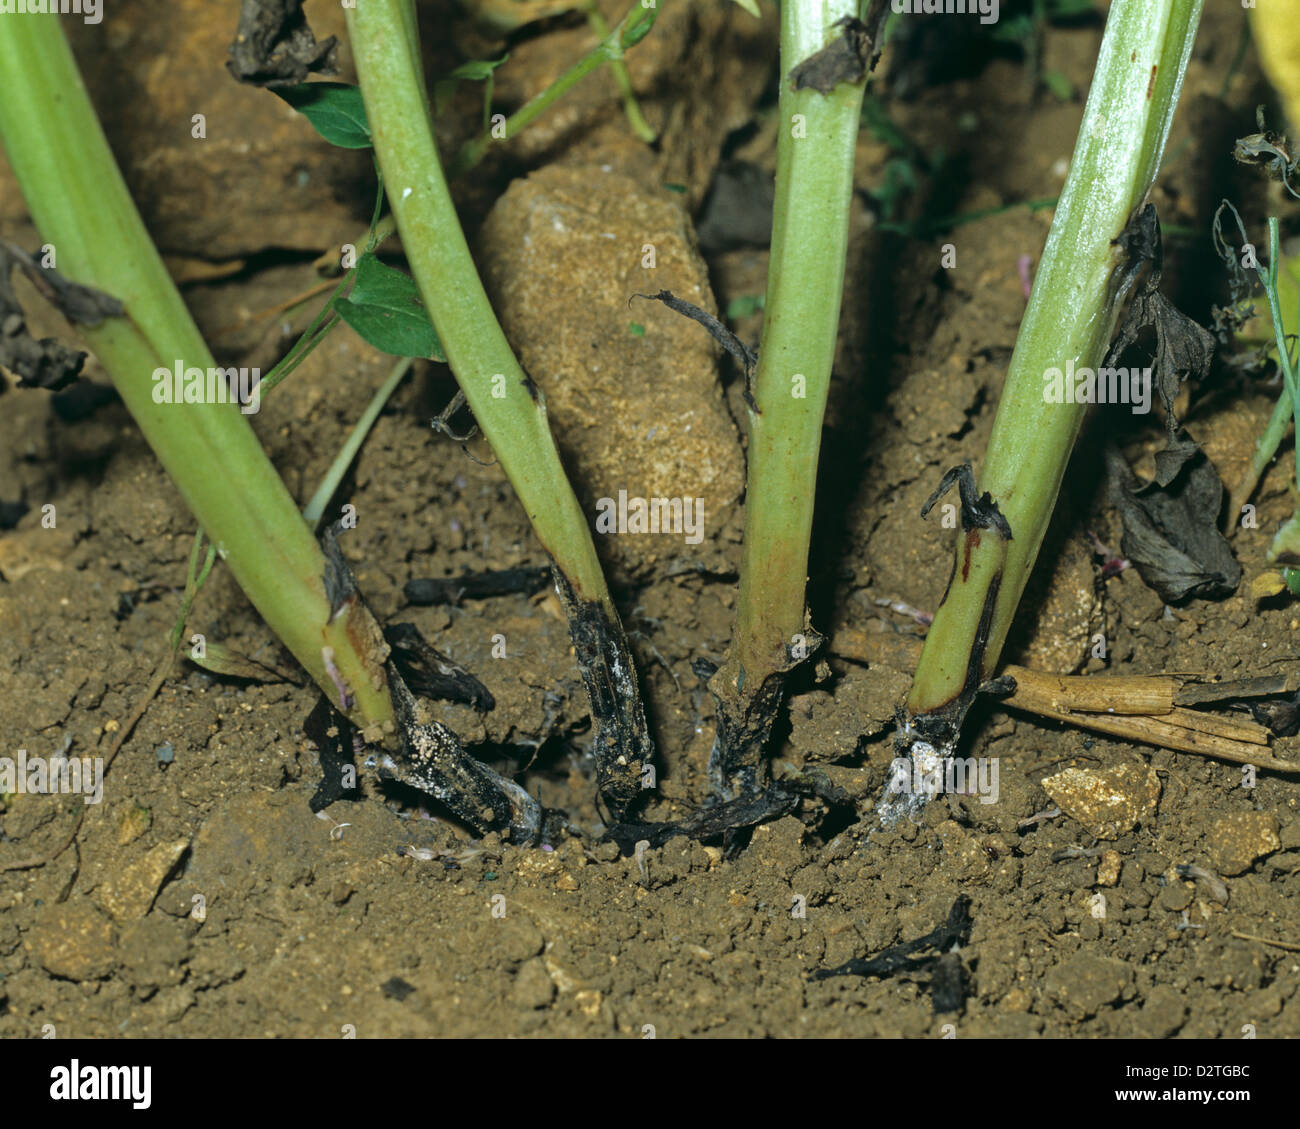 Foot rot, Fusarium culmorum, lesions and mycelium on field Vicia bean plant stem bases Stock Photo